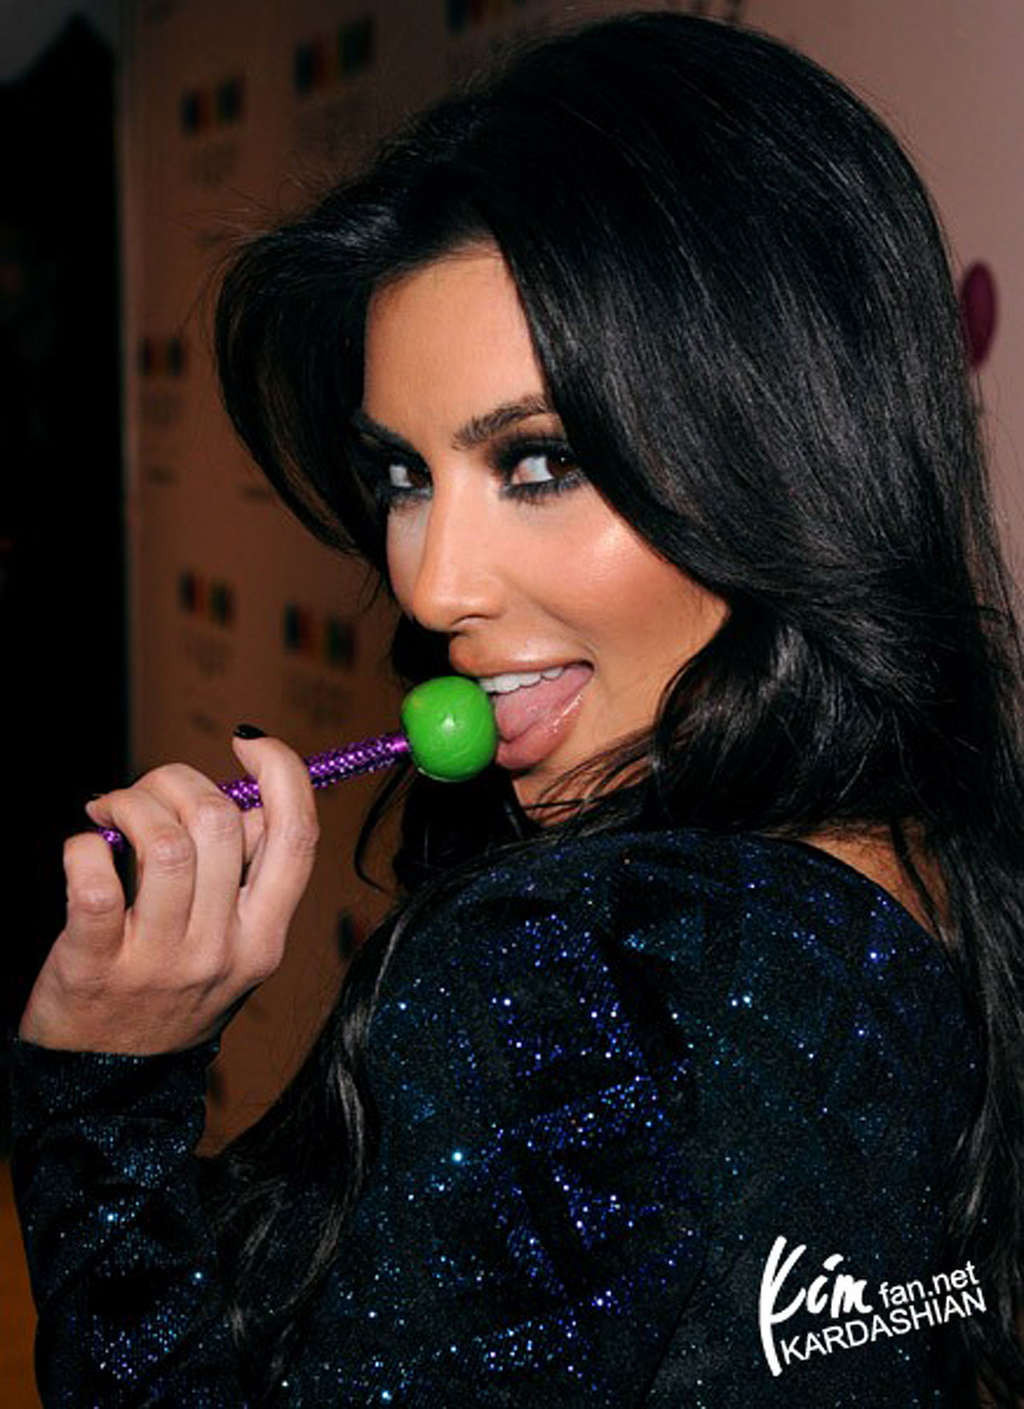 Kim Kardashian licking lollipop on a extremely sexy way hot photos #75363030